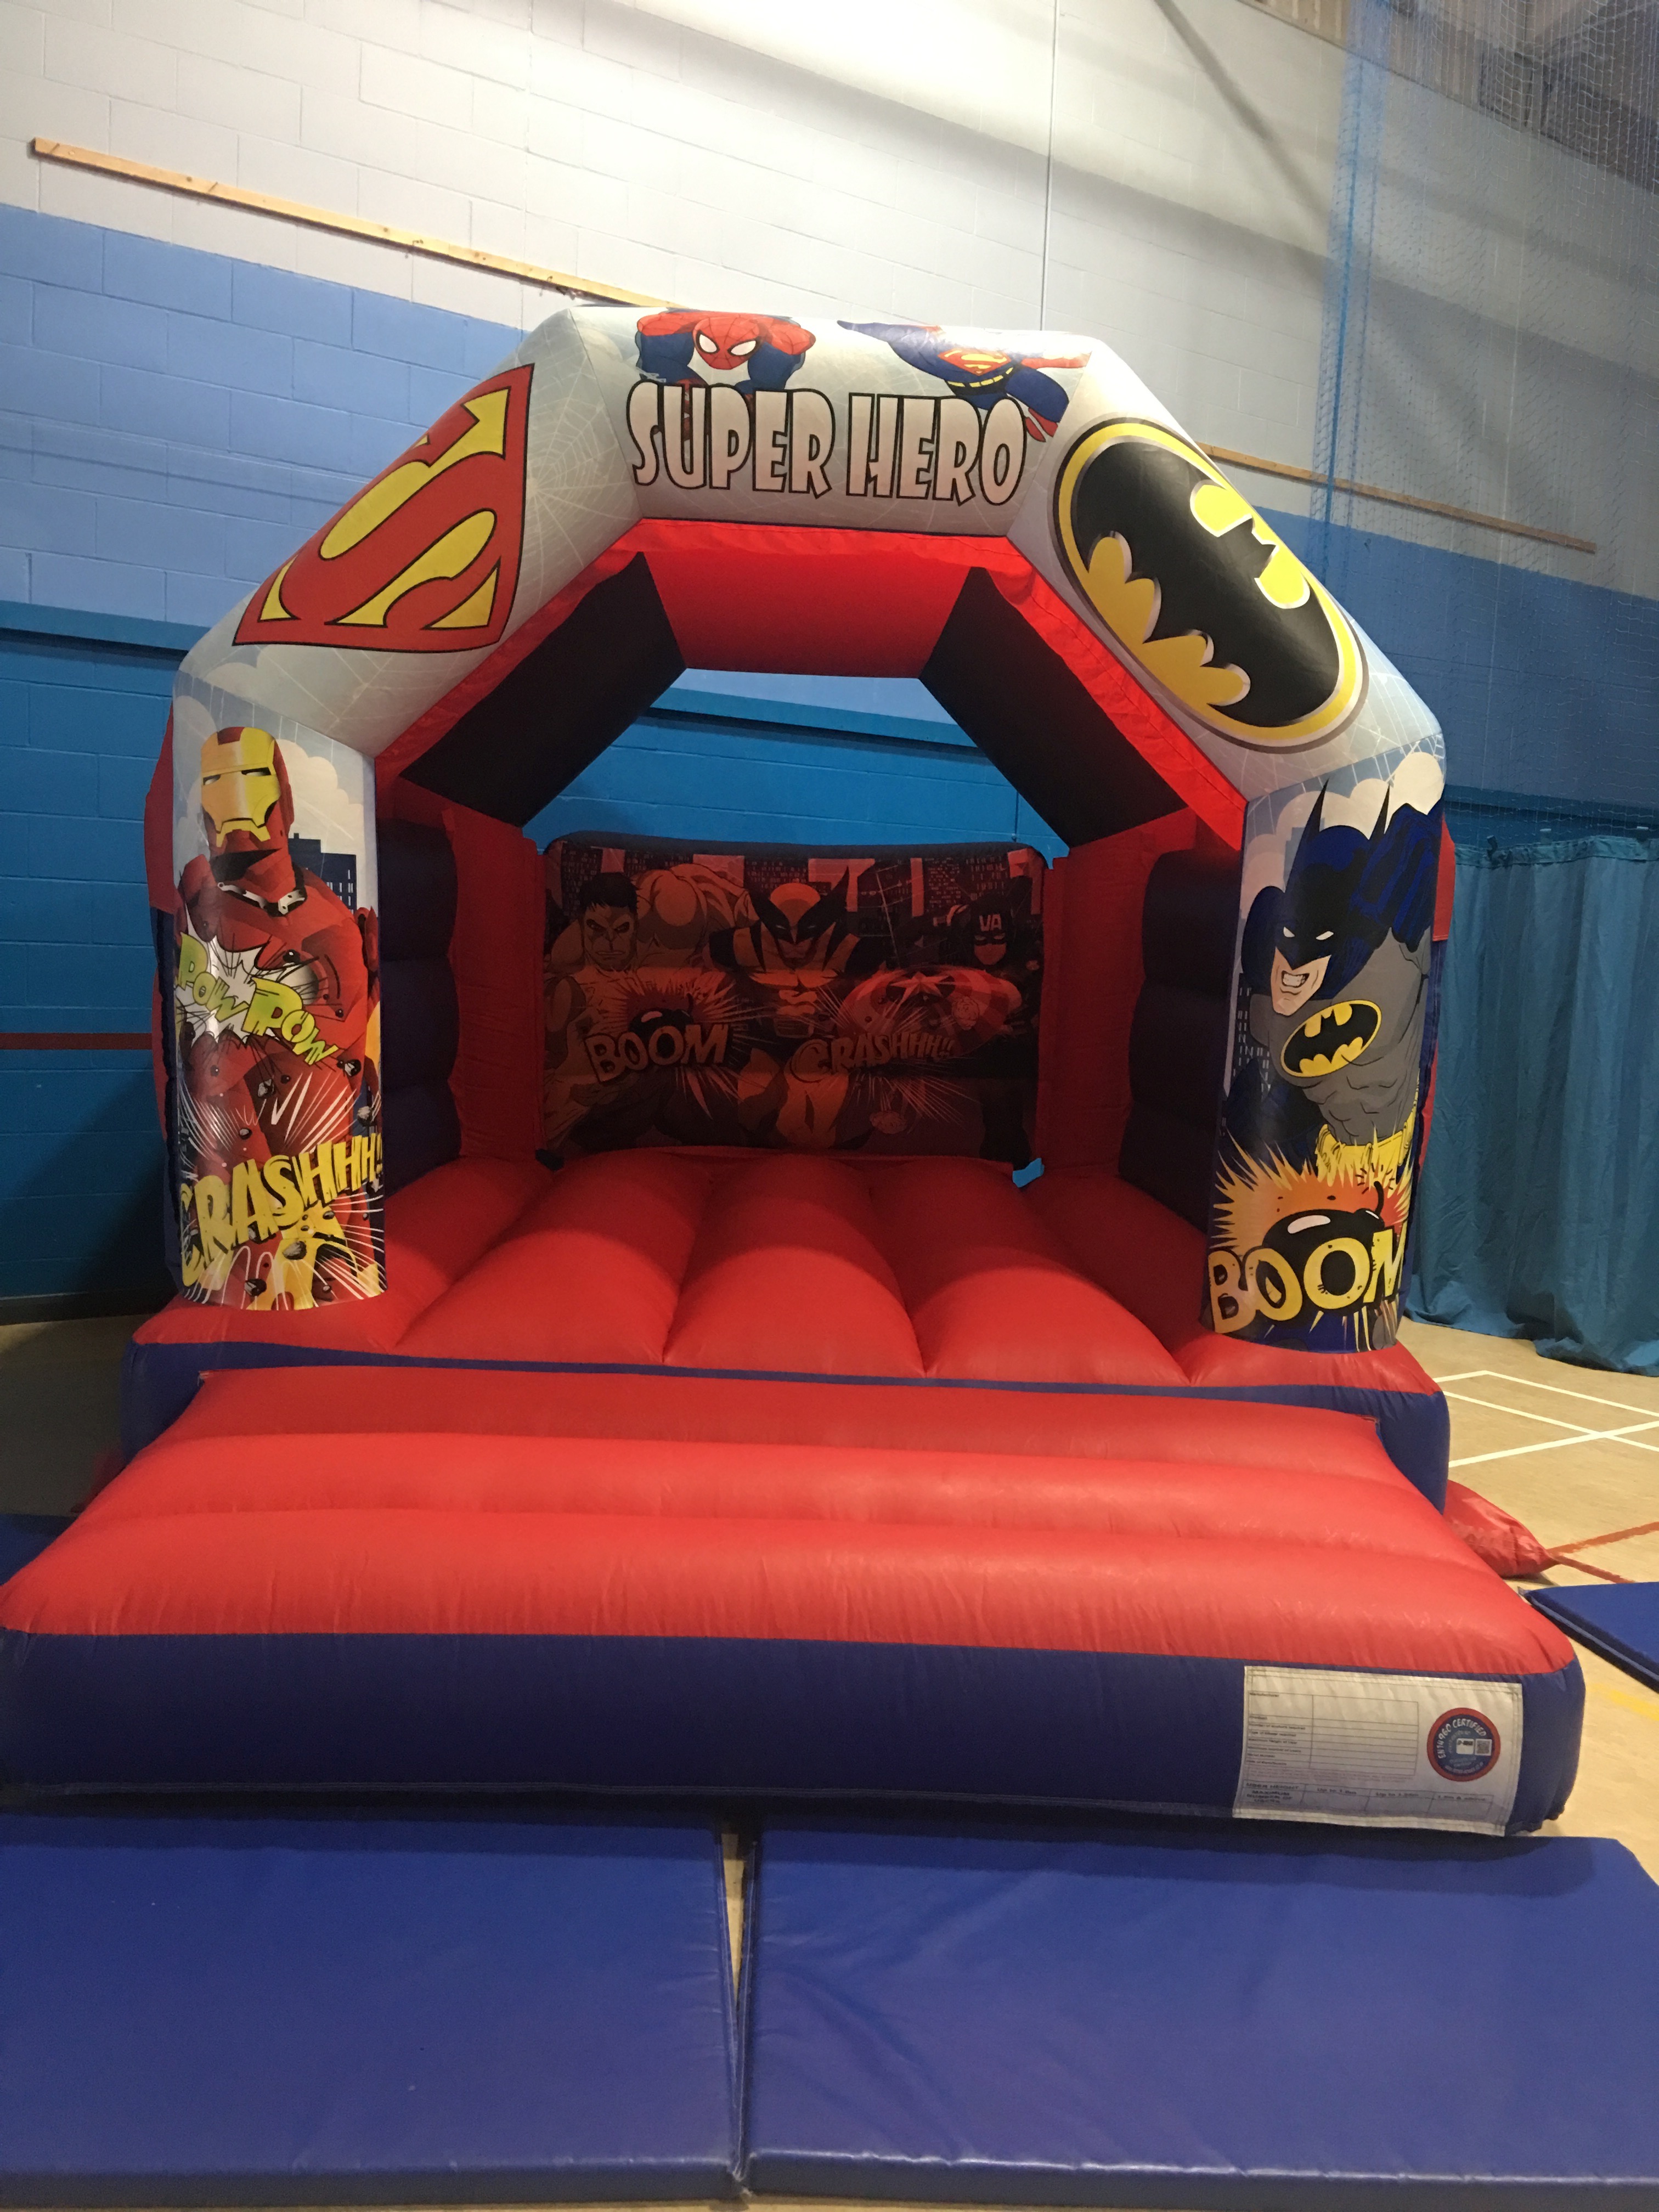 Big News!!! Inflatable Nightclub Arriving This Week🥂🍻 - Bouncy Castle  Hire Northampton in Northampton, Wellingborough, Kettering, Daventry,  Towcester, Northamptonshire